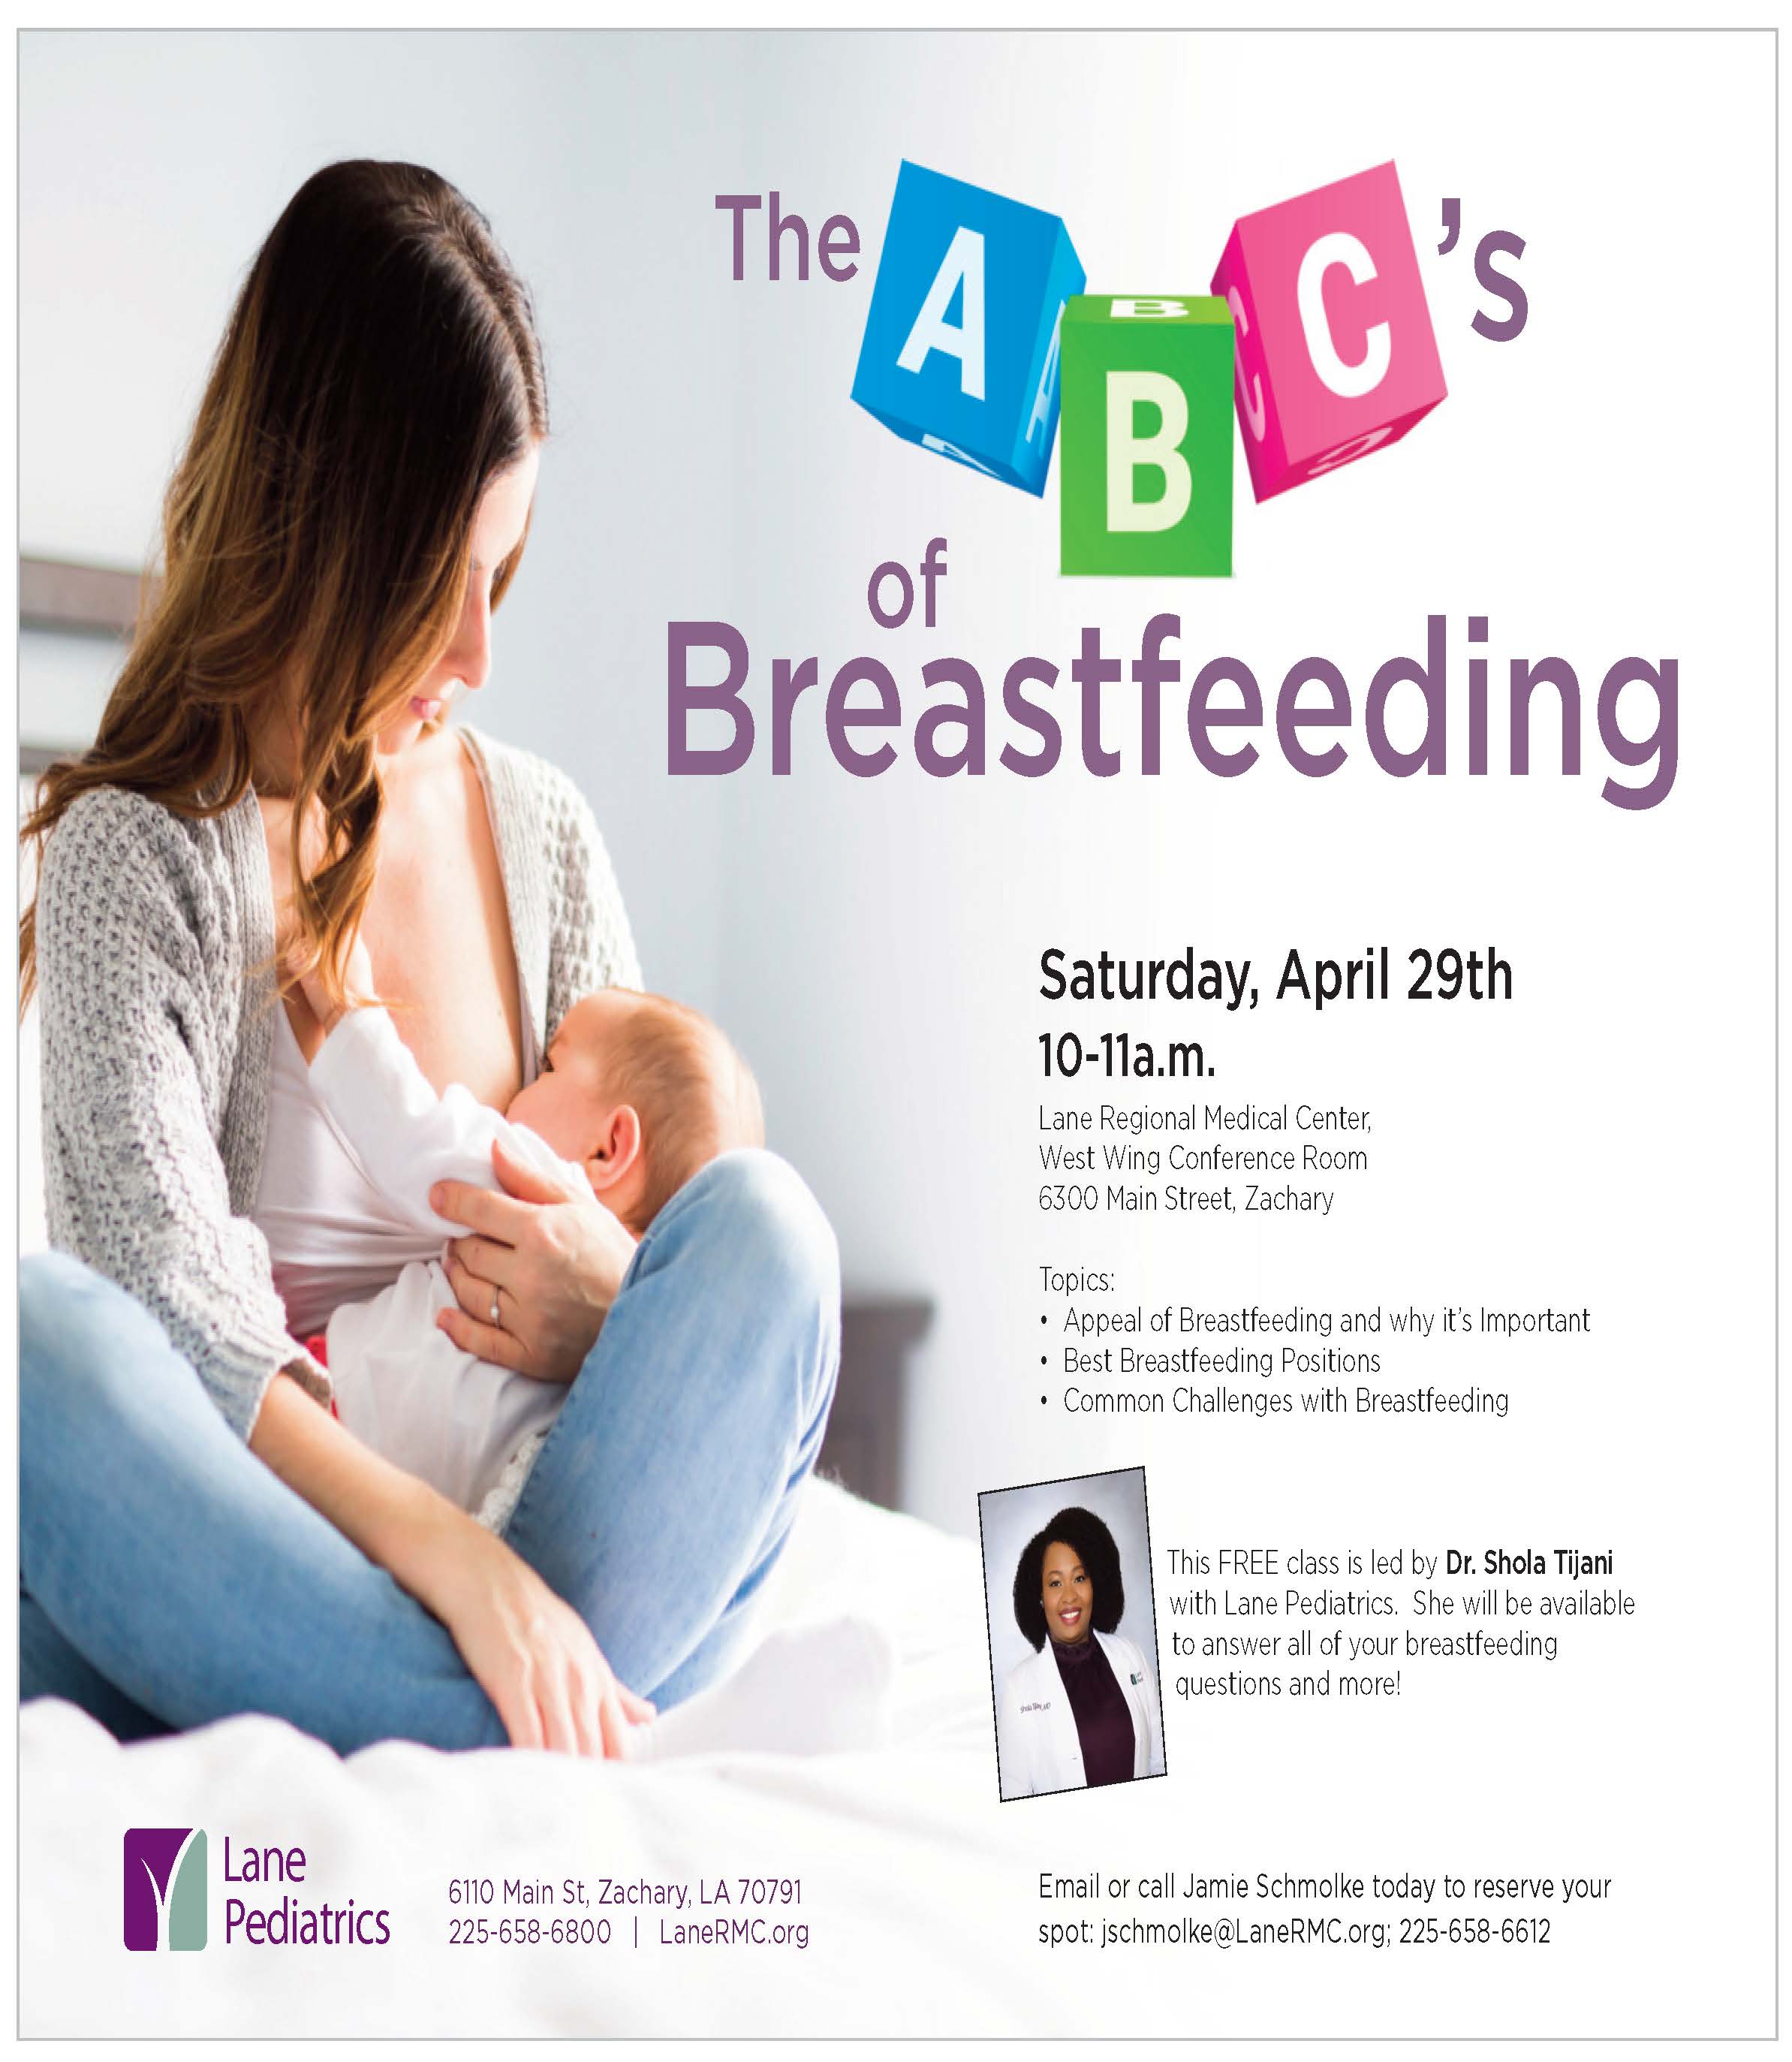 Lane to Hold FREE Breastfeeding Class